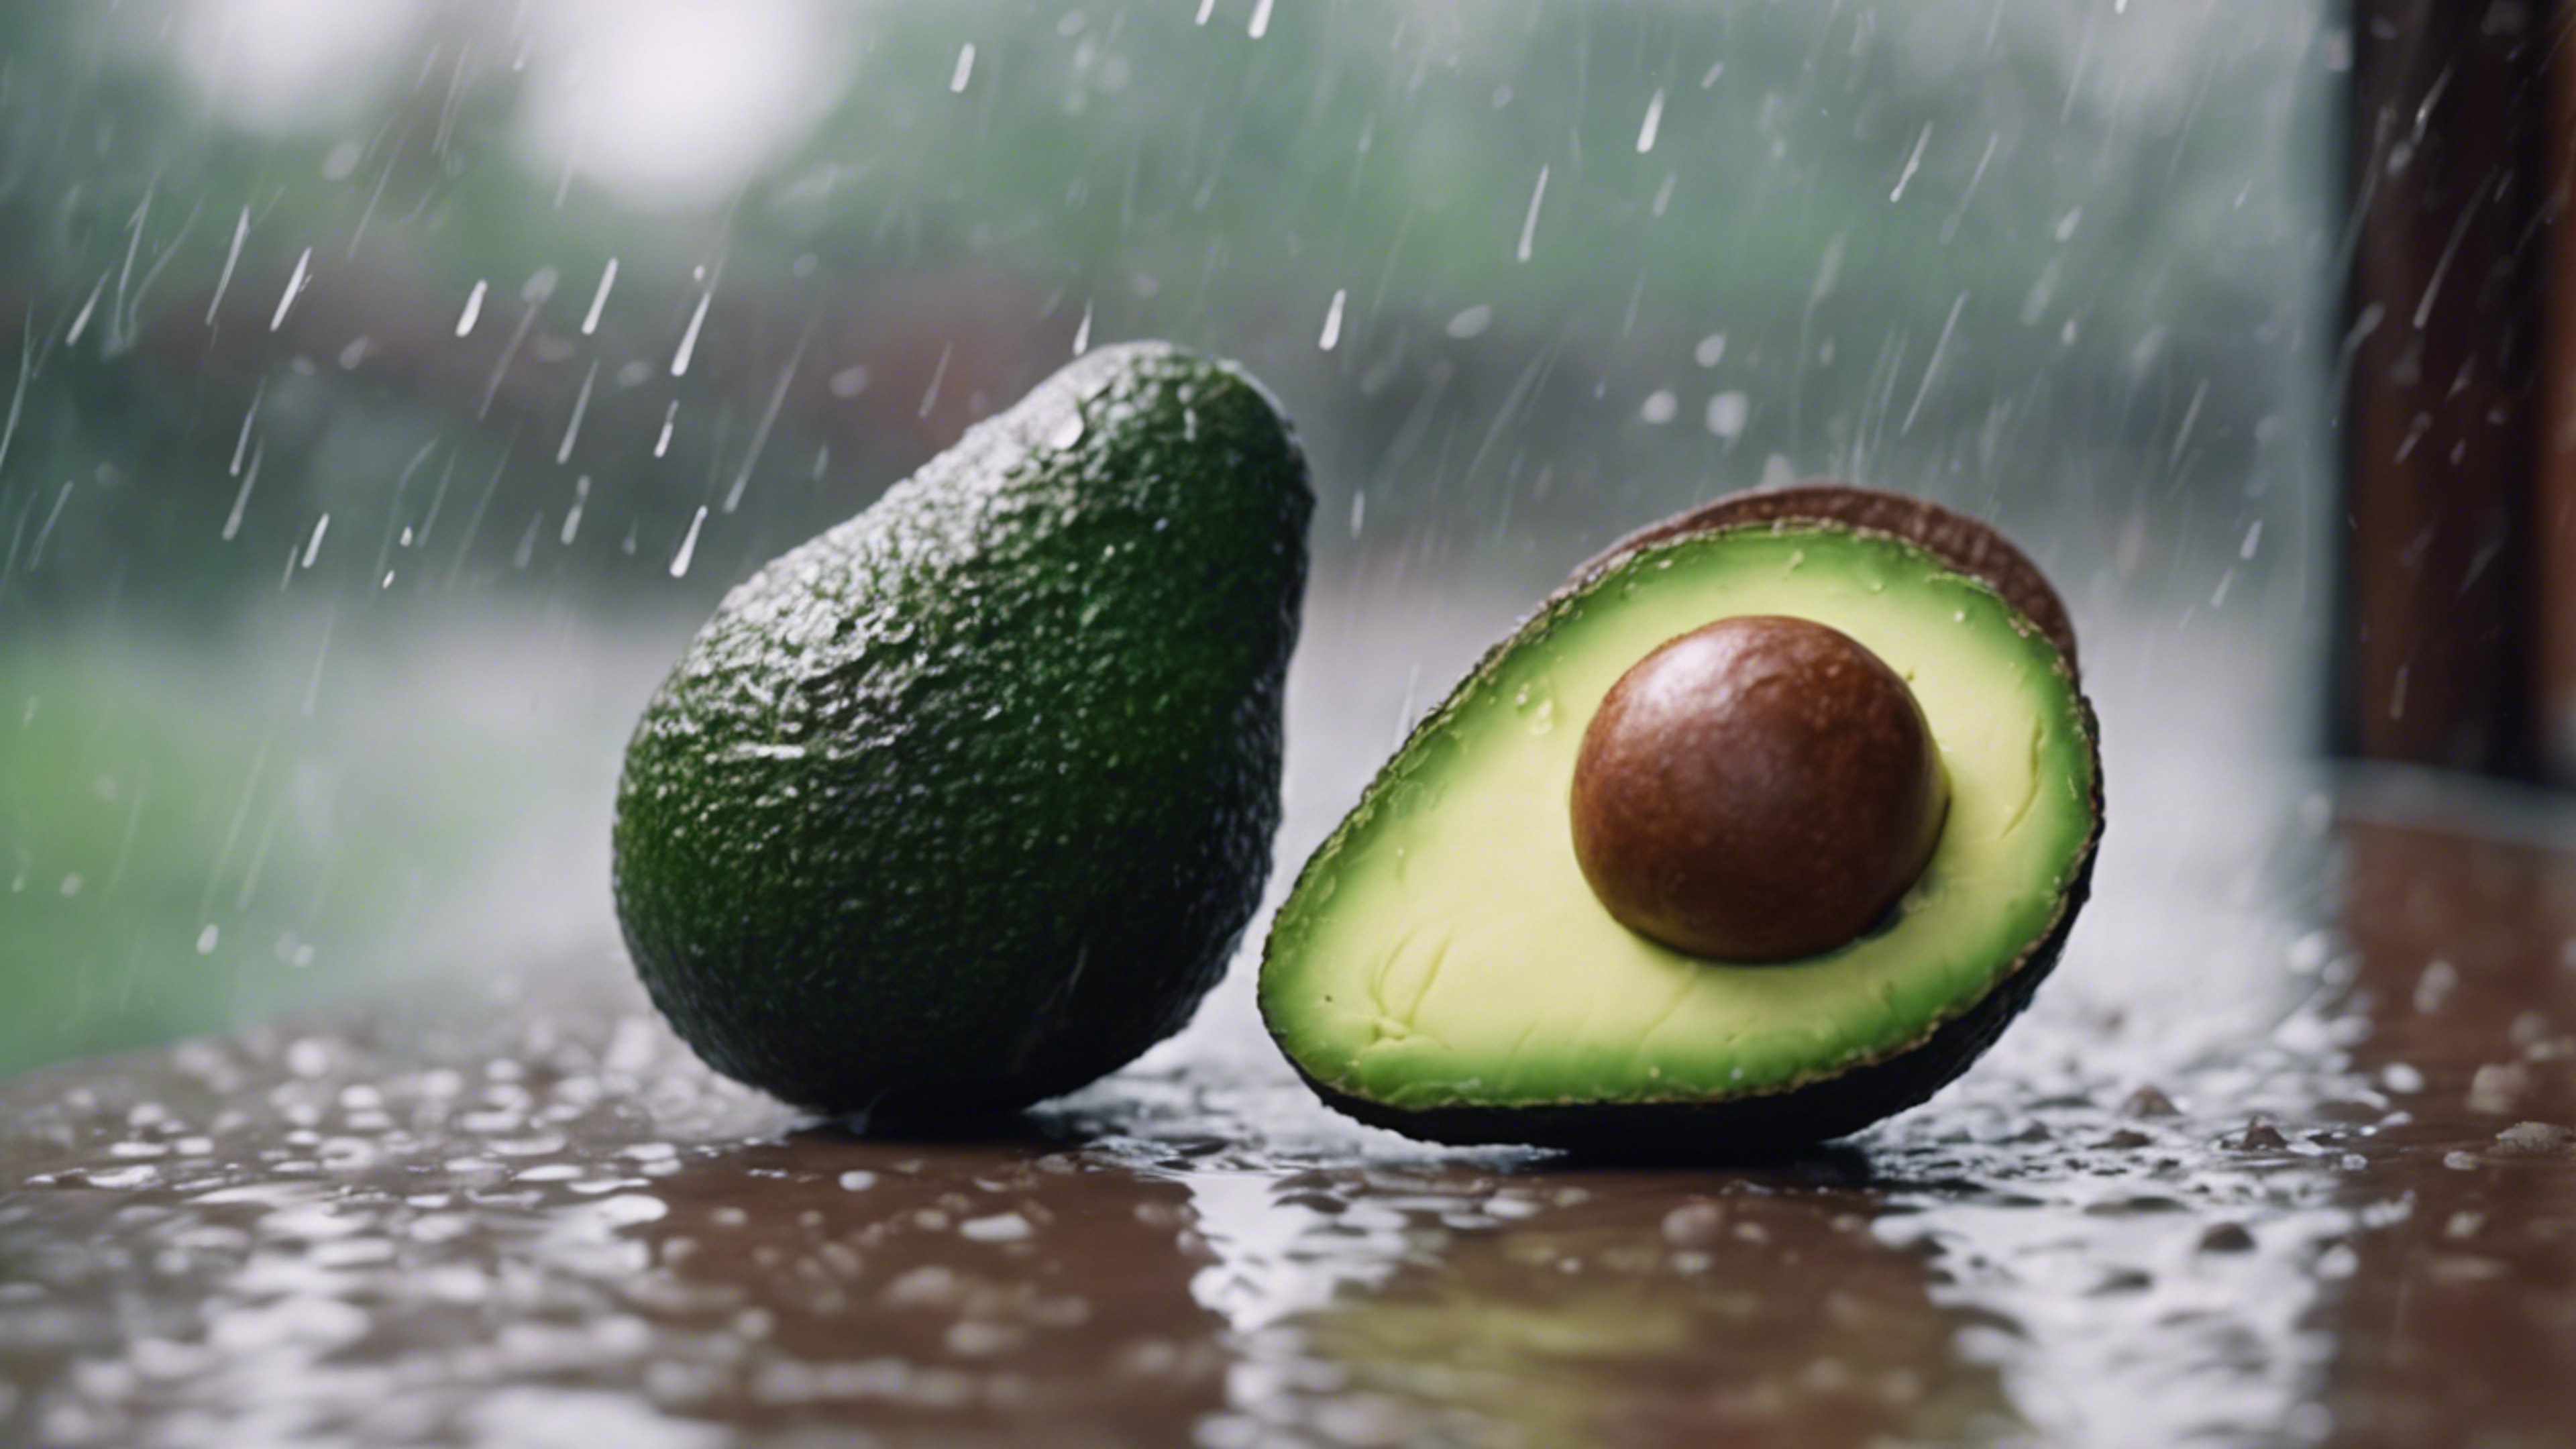 An adorable avocado in a quiet reflection on a rainy day ورق الجدران[1229e2b9e9634c7f8c86]